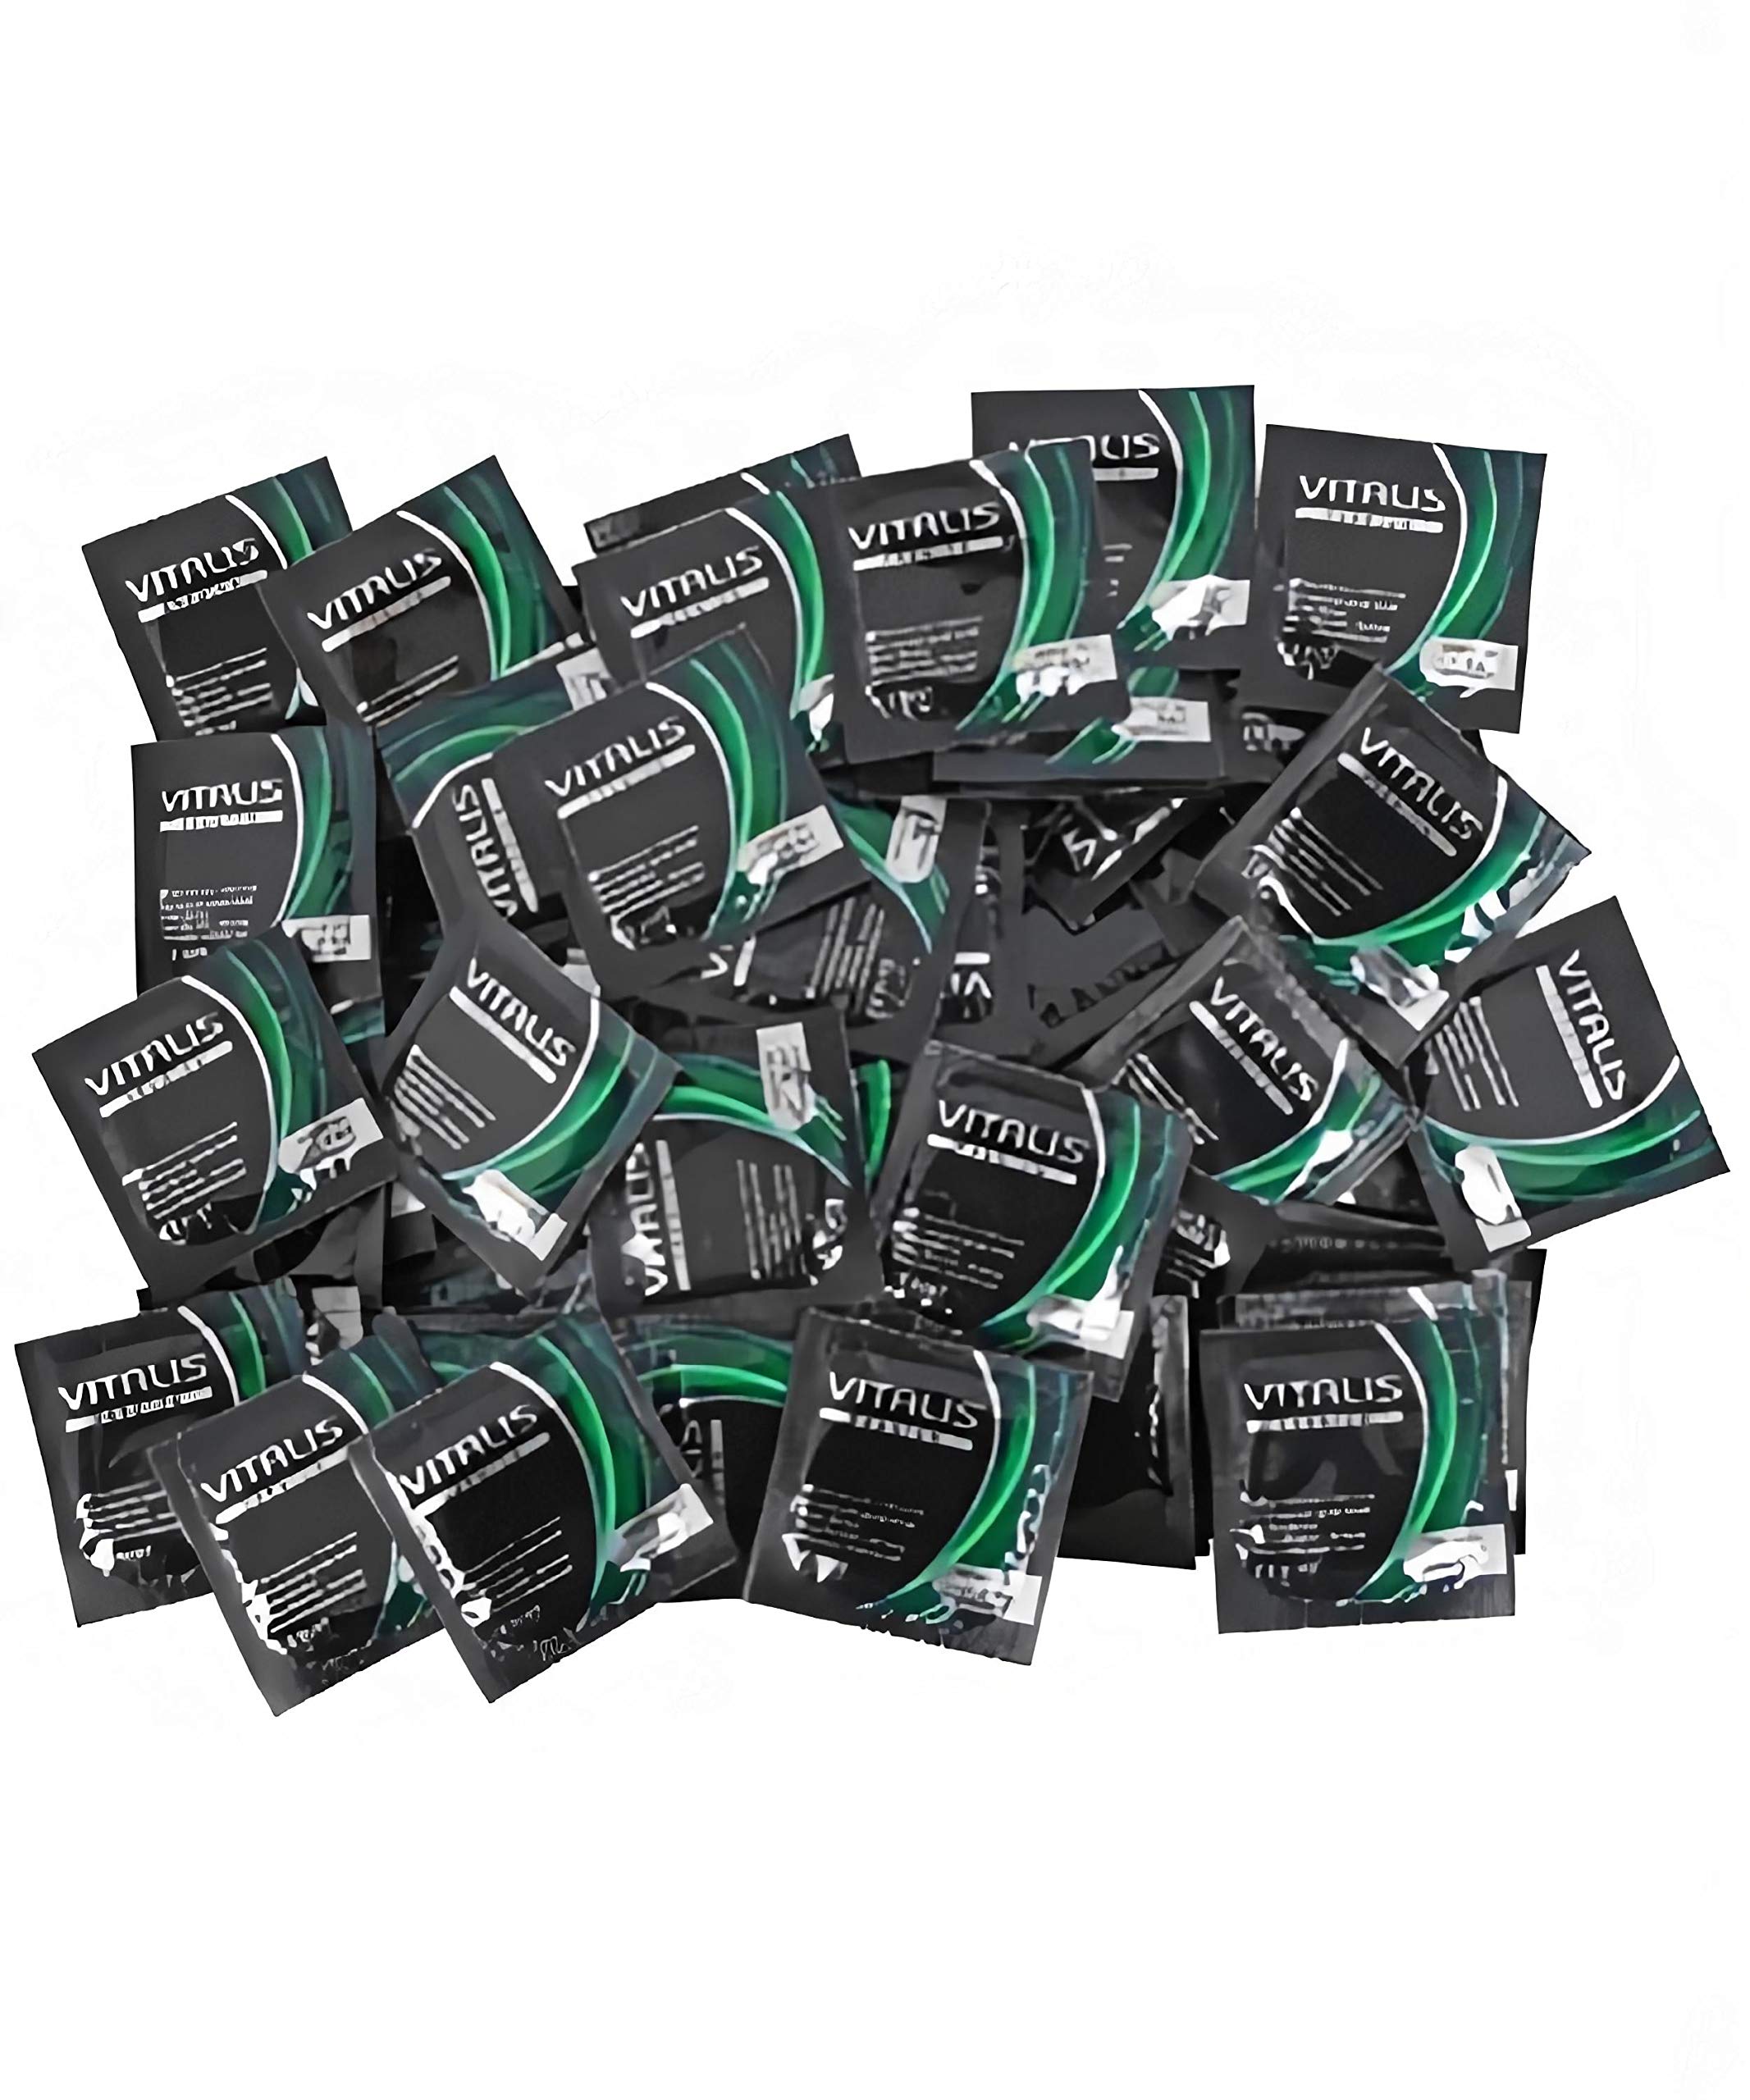 VITALIS 100 Kondome Pack XL I Nennbreite 57 mm I Gefühlsechte transparente Kondome extra groß I 100 Premium Kondome mit Gleitmittel auf Silikonbasis I Zarte Kondome für Männer